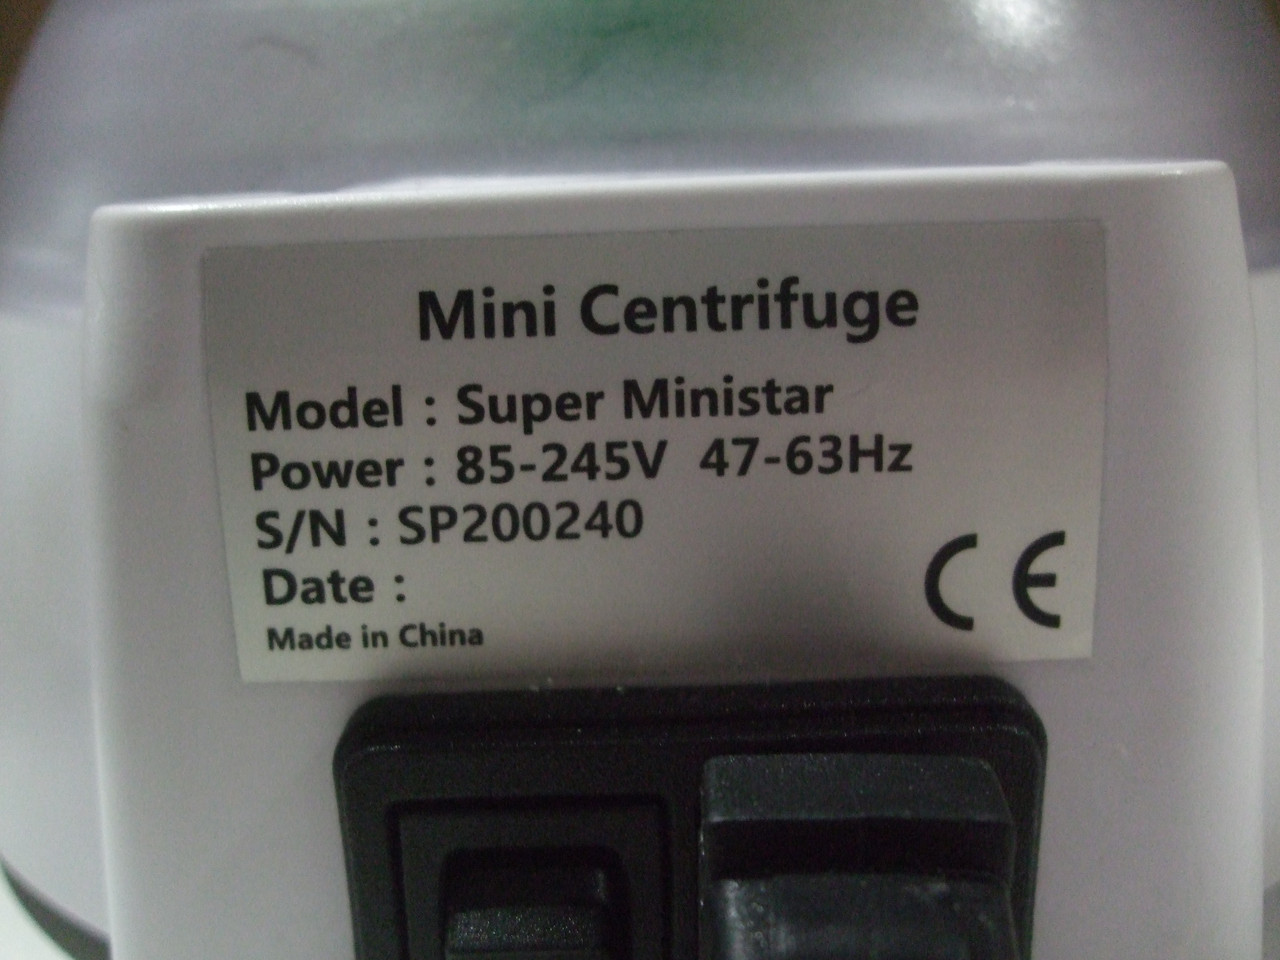 USED Super MiniStar Mini Centrifuge - European 250 V Power Cord